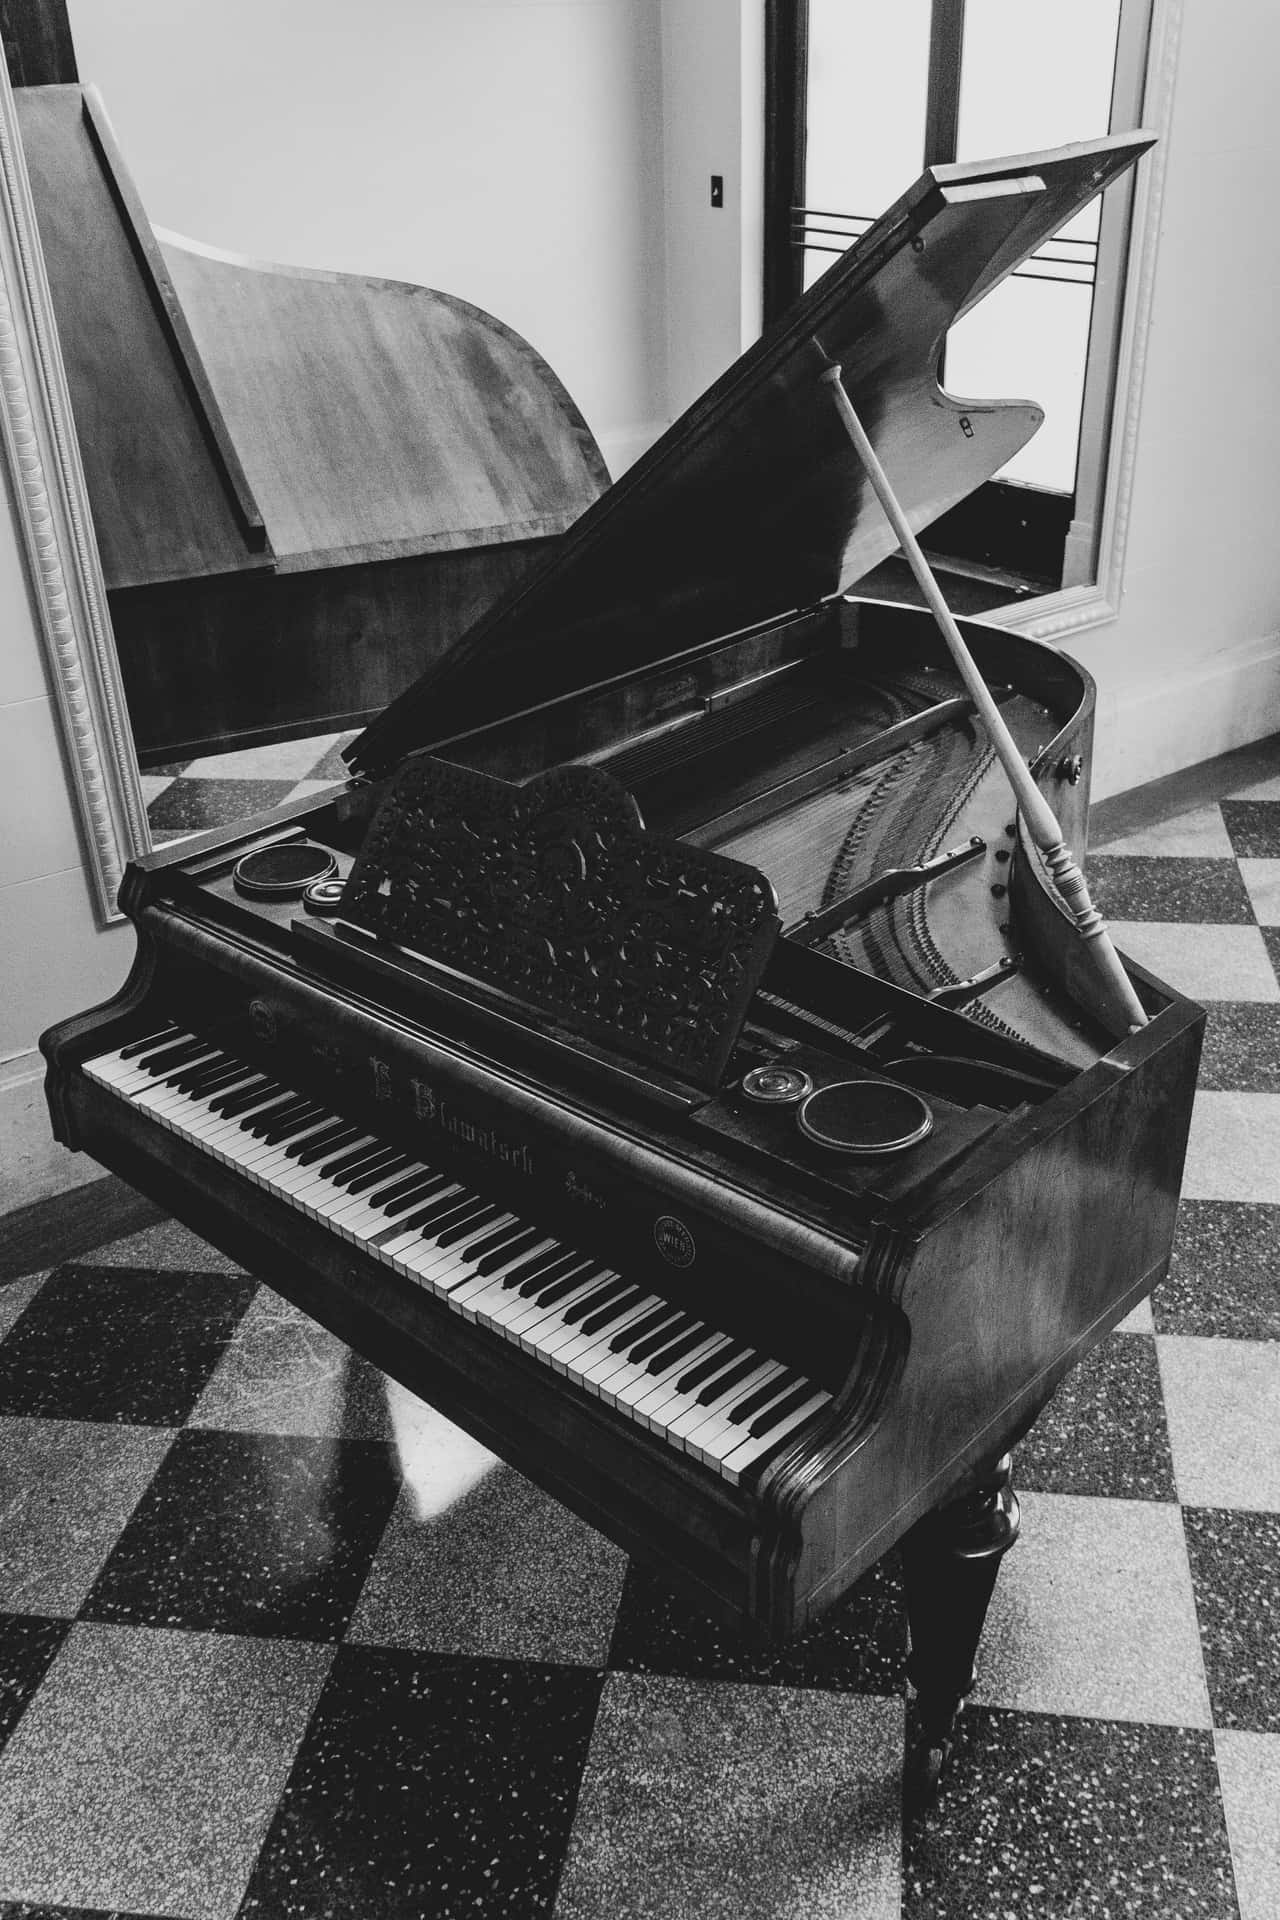 A black and white grand piano in an elegant, minimalist setting. Wallpaper